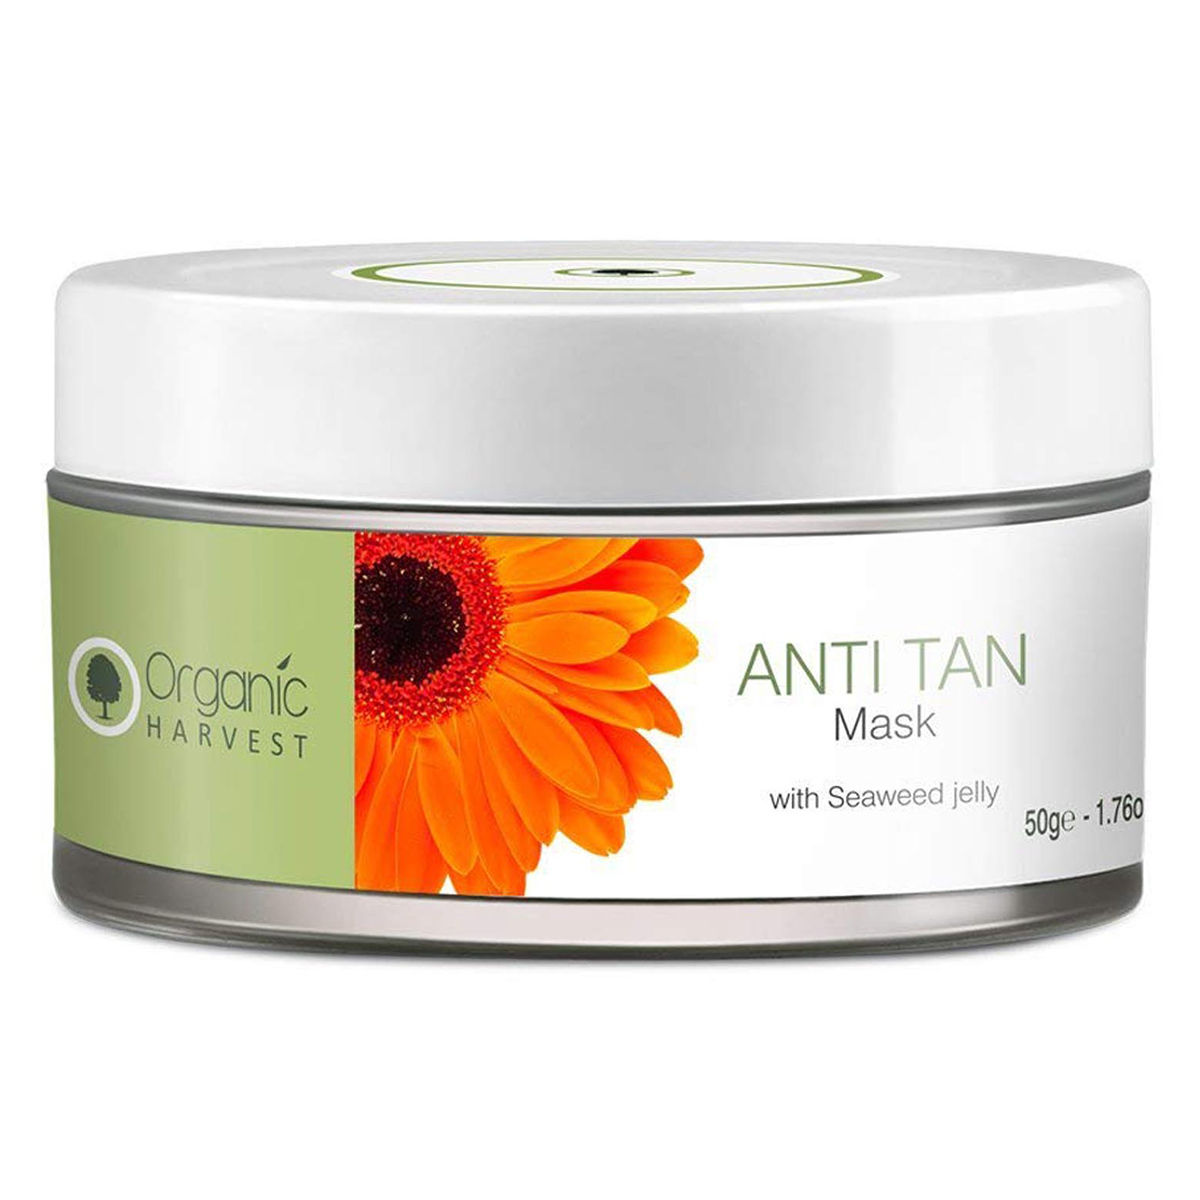 Buy Organic Harvest Anti Tan Mask, 50 gm Online